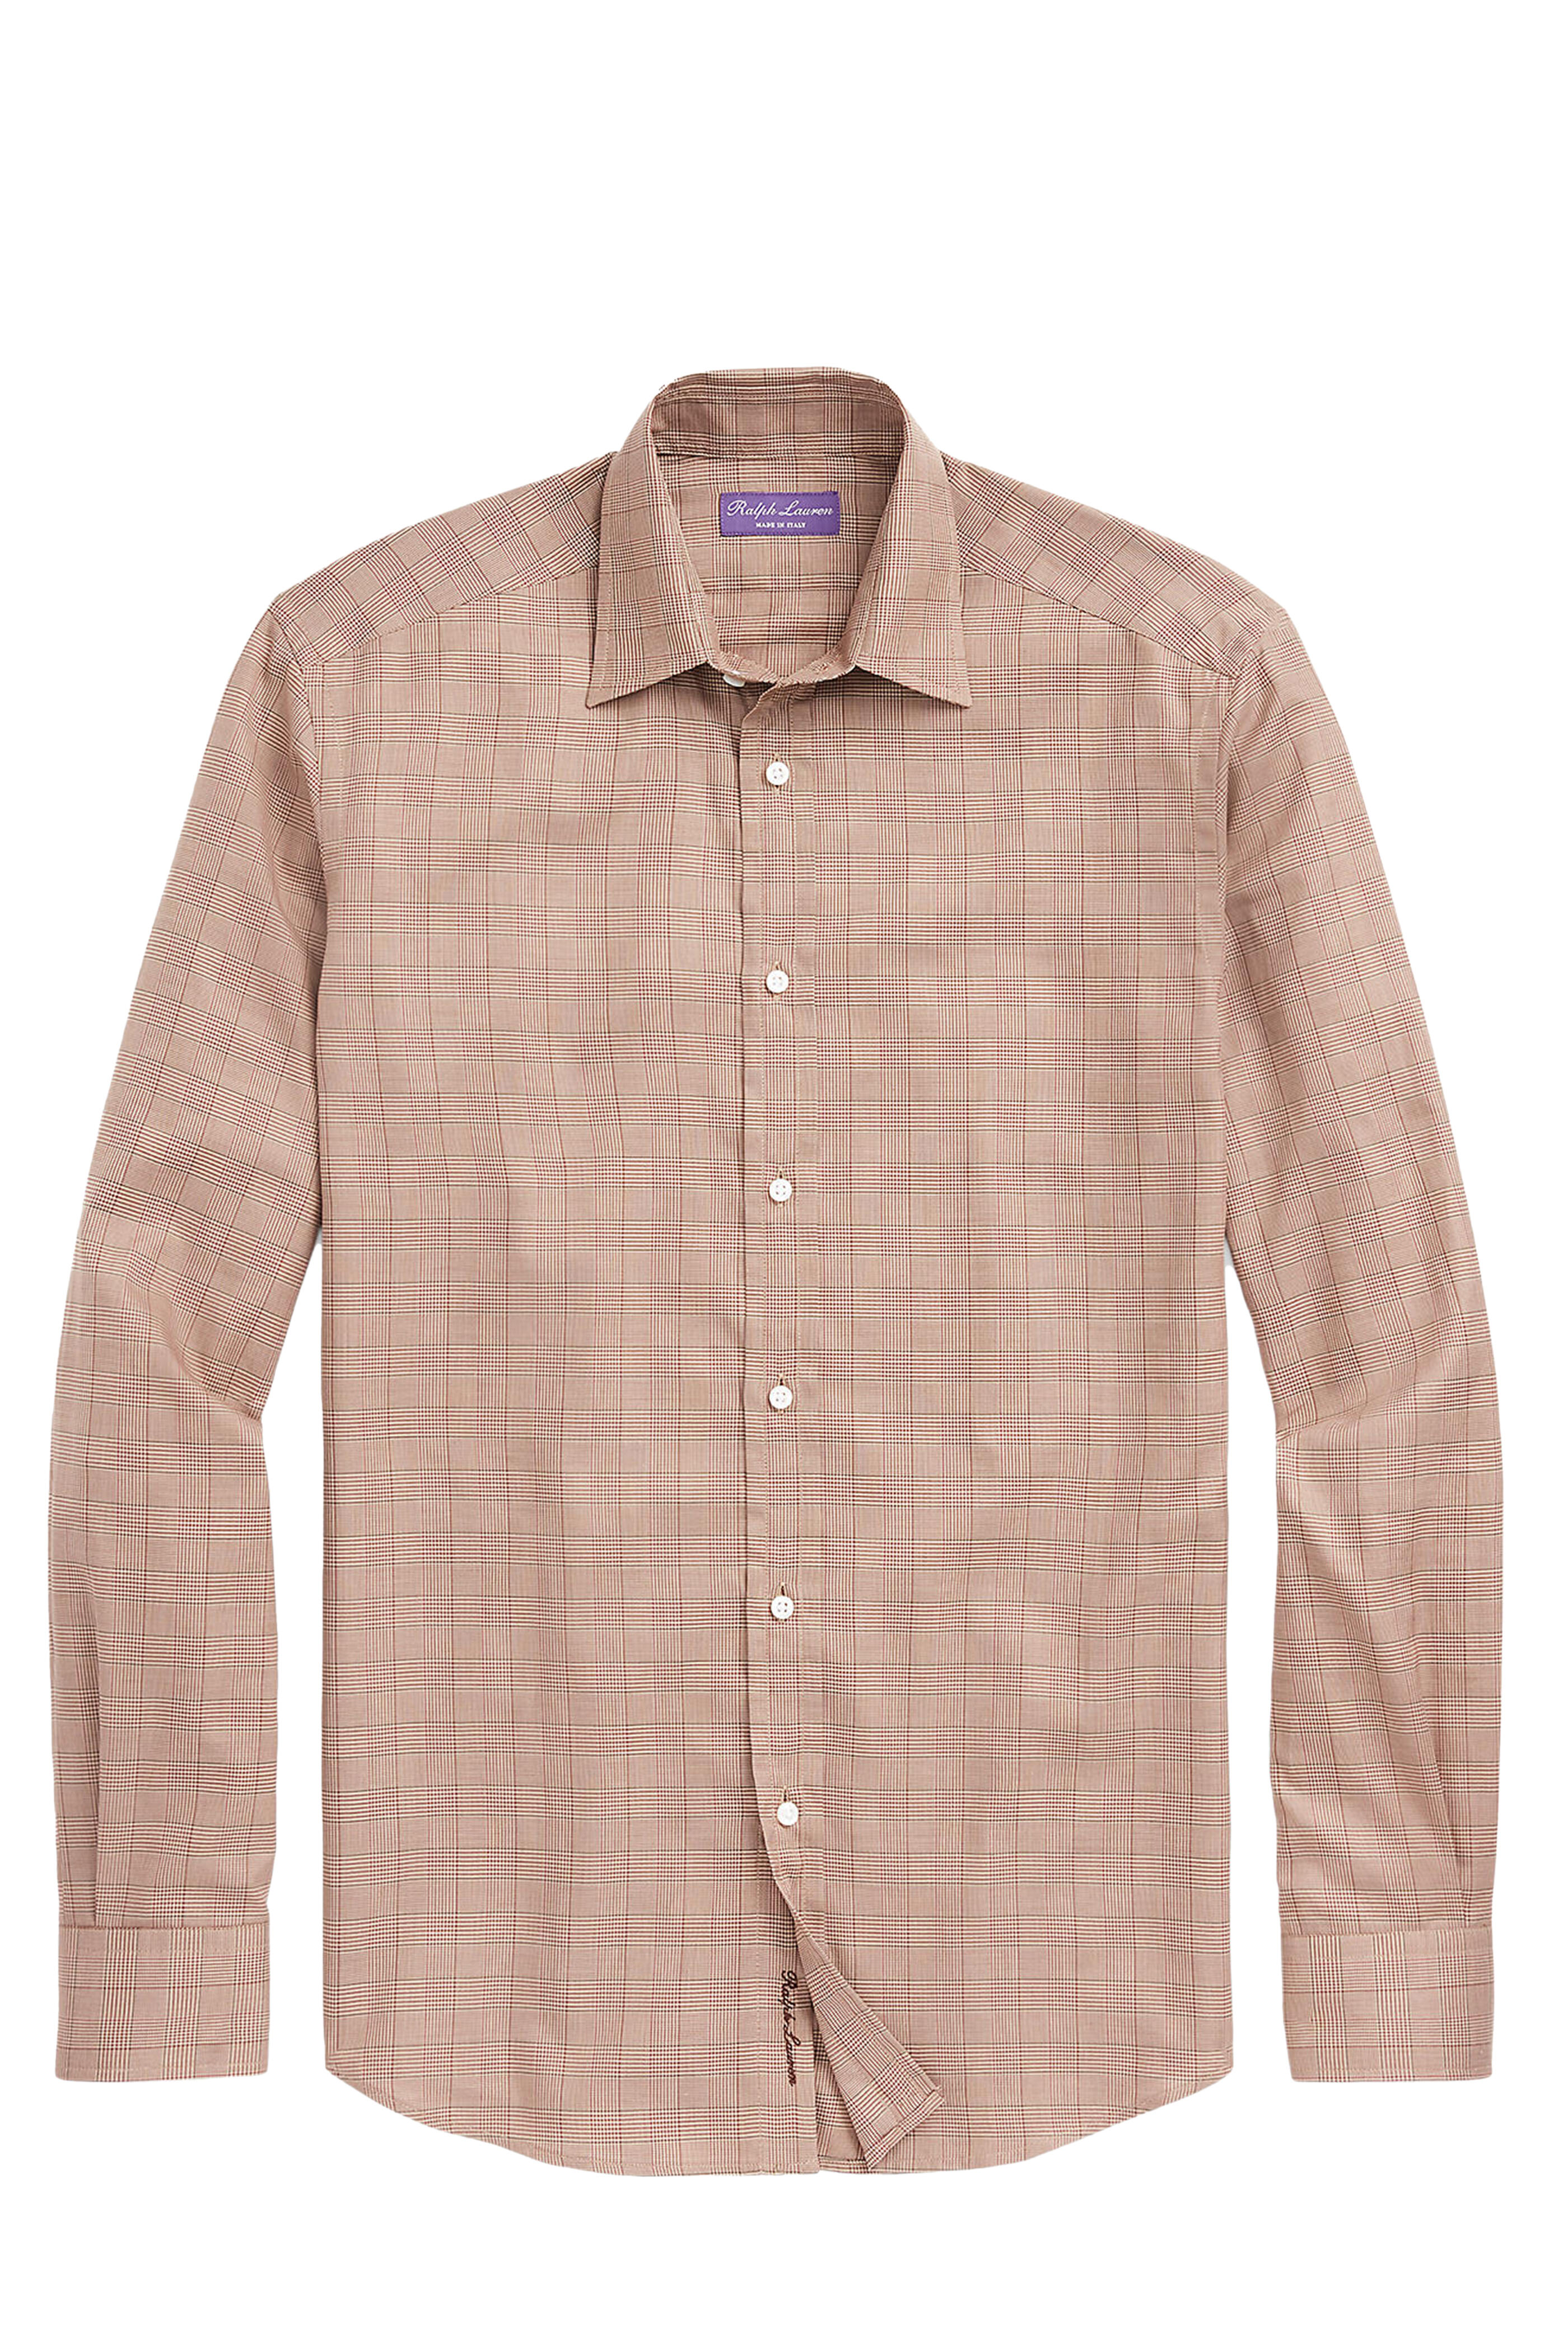 Ralph Lauren Purple Label - Brown Plaid Sport Shirt